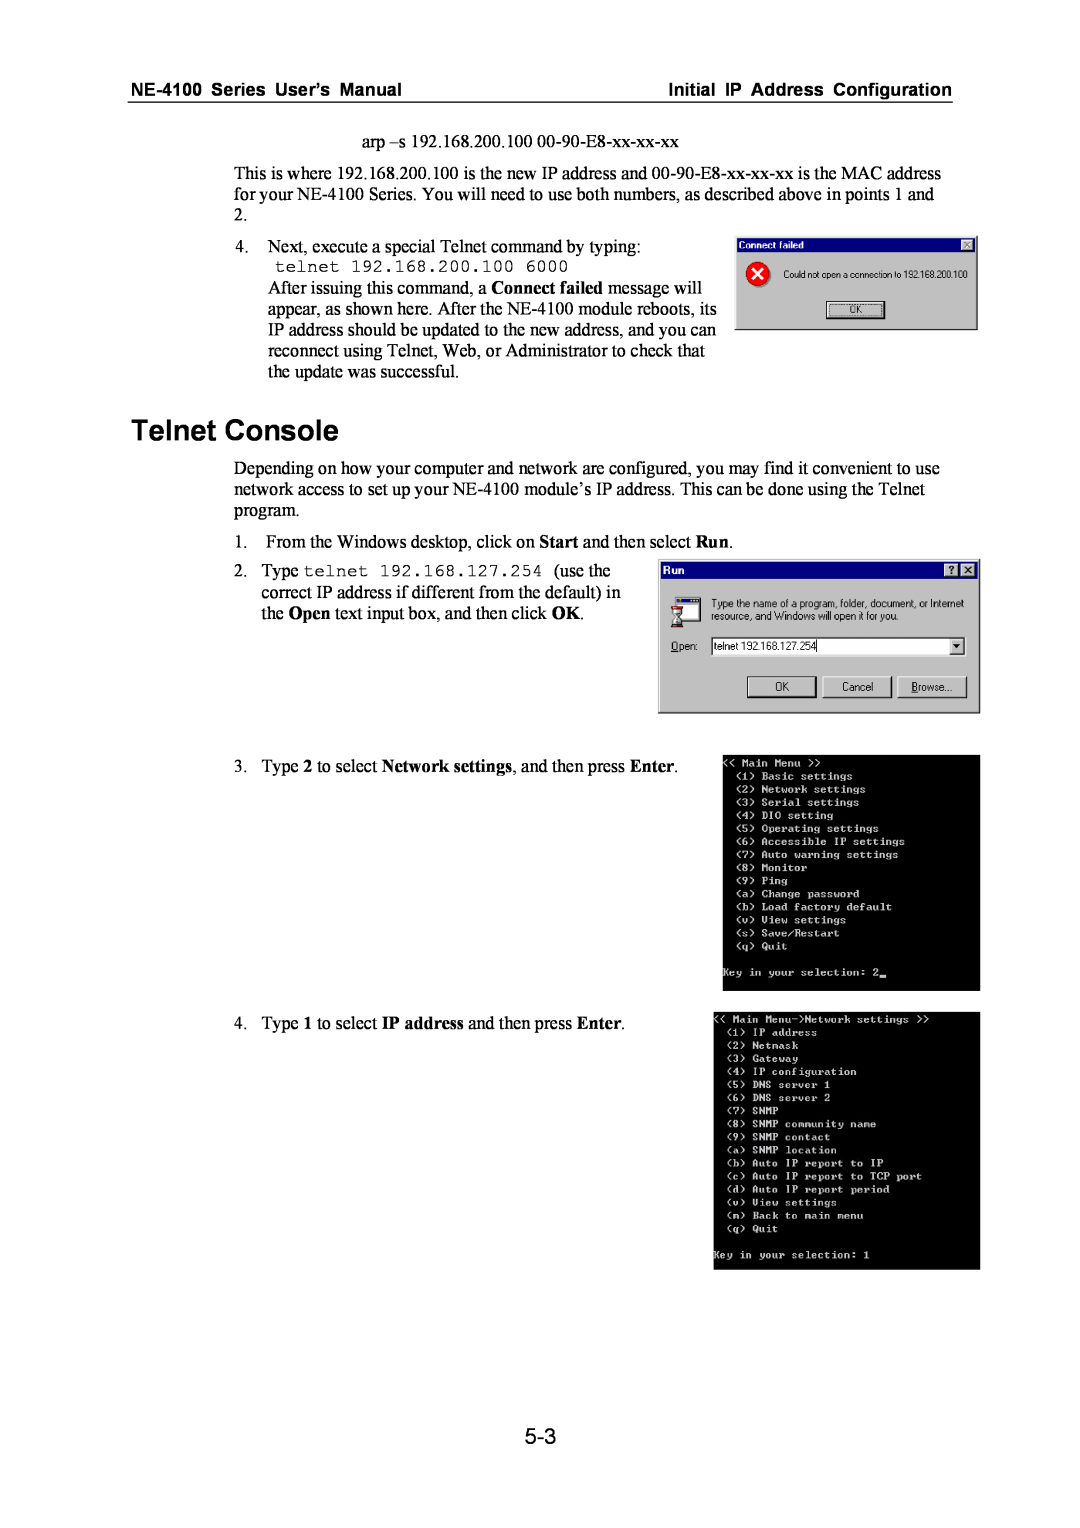 Moxa Technologies user manual Telnet Console, NE-4100 Series User’s Manual, Initial IP Address Configuration 